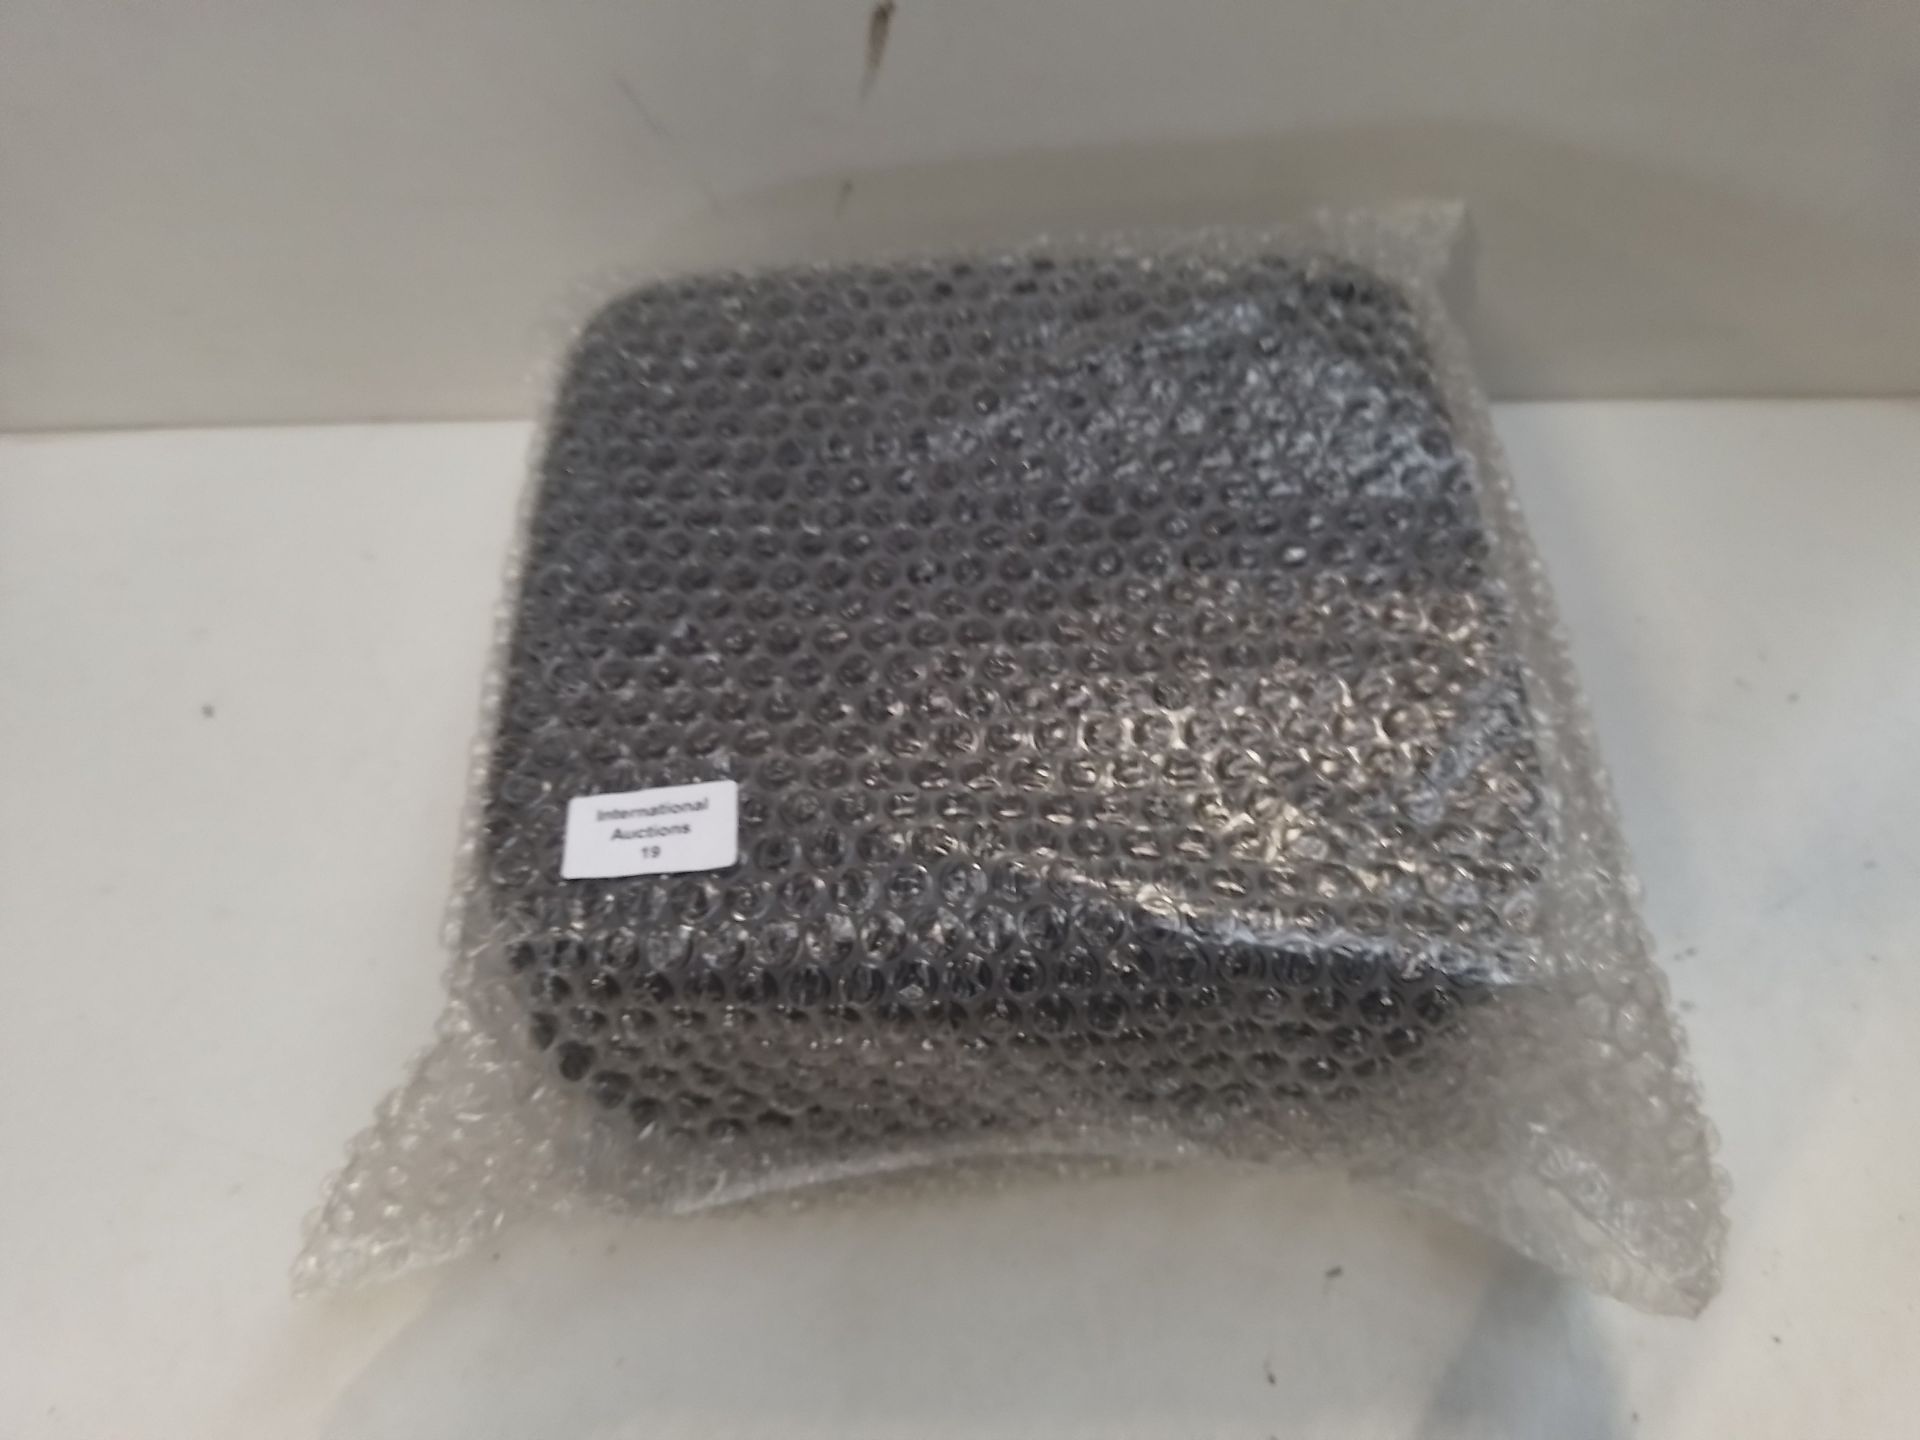 RRP £39.00 ONTOMYO Mavic 3 Case Storage Bag Hard Shell Box (Black) - Image 2 of 2